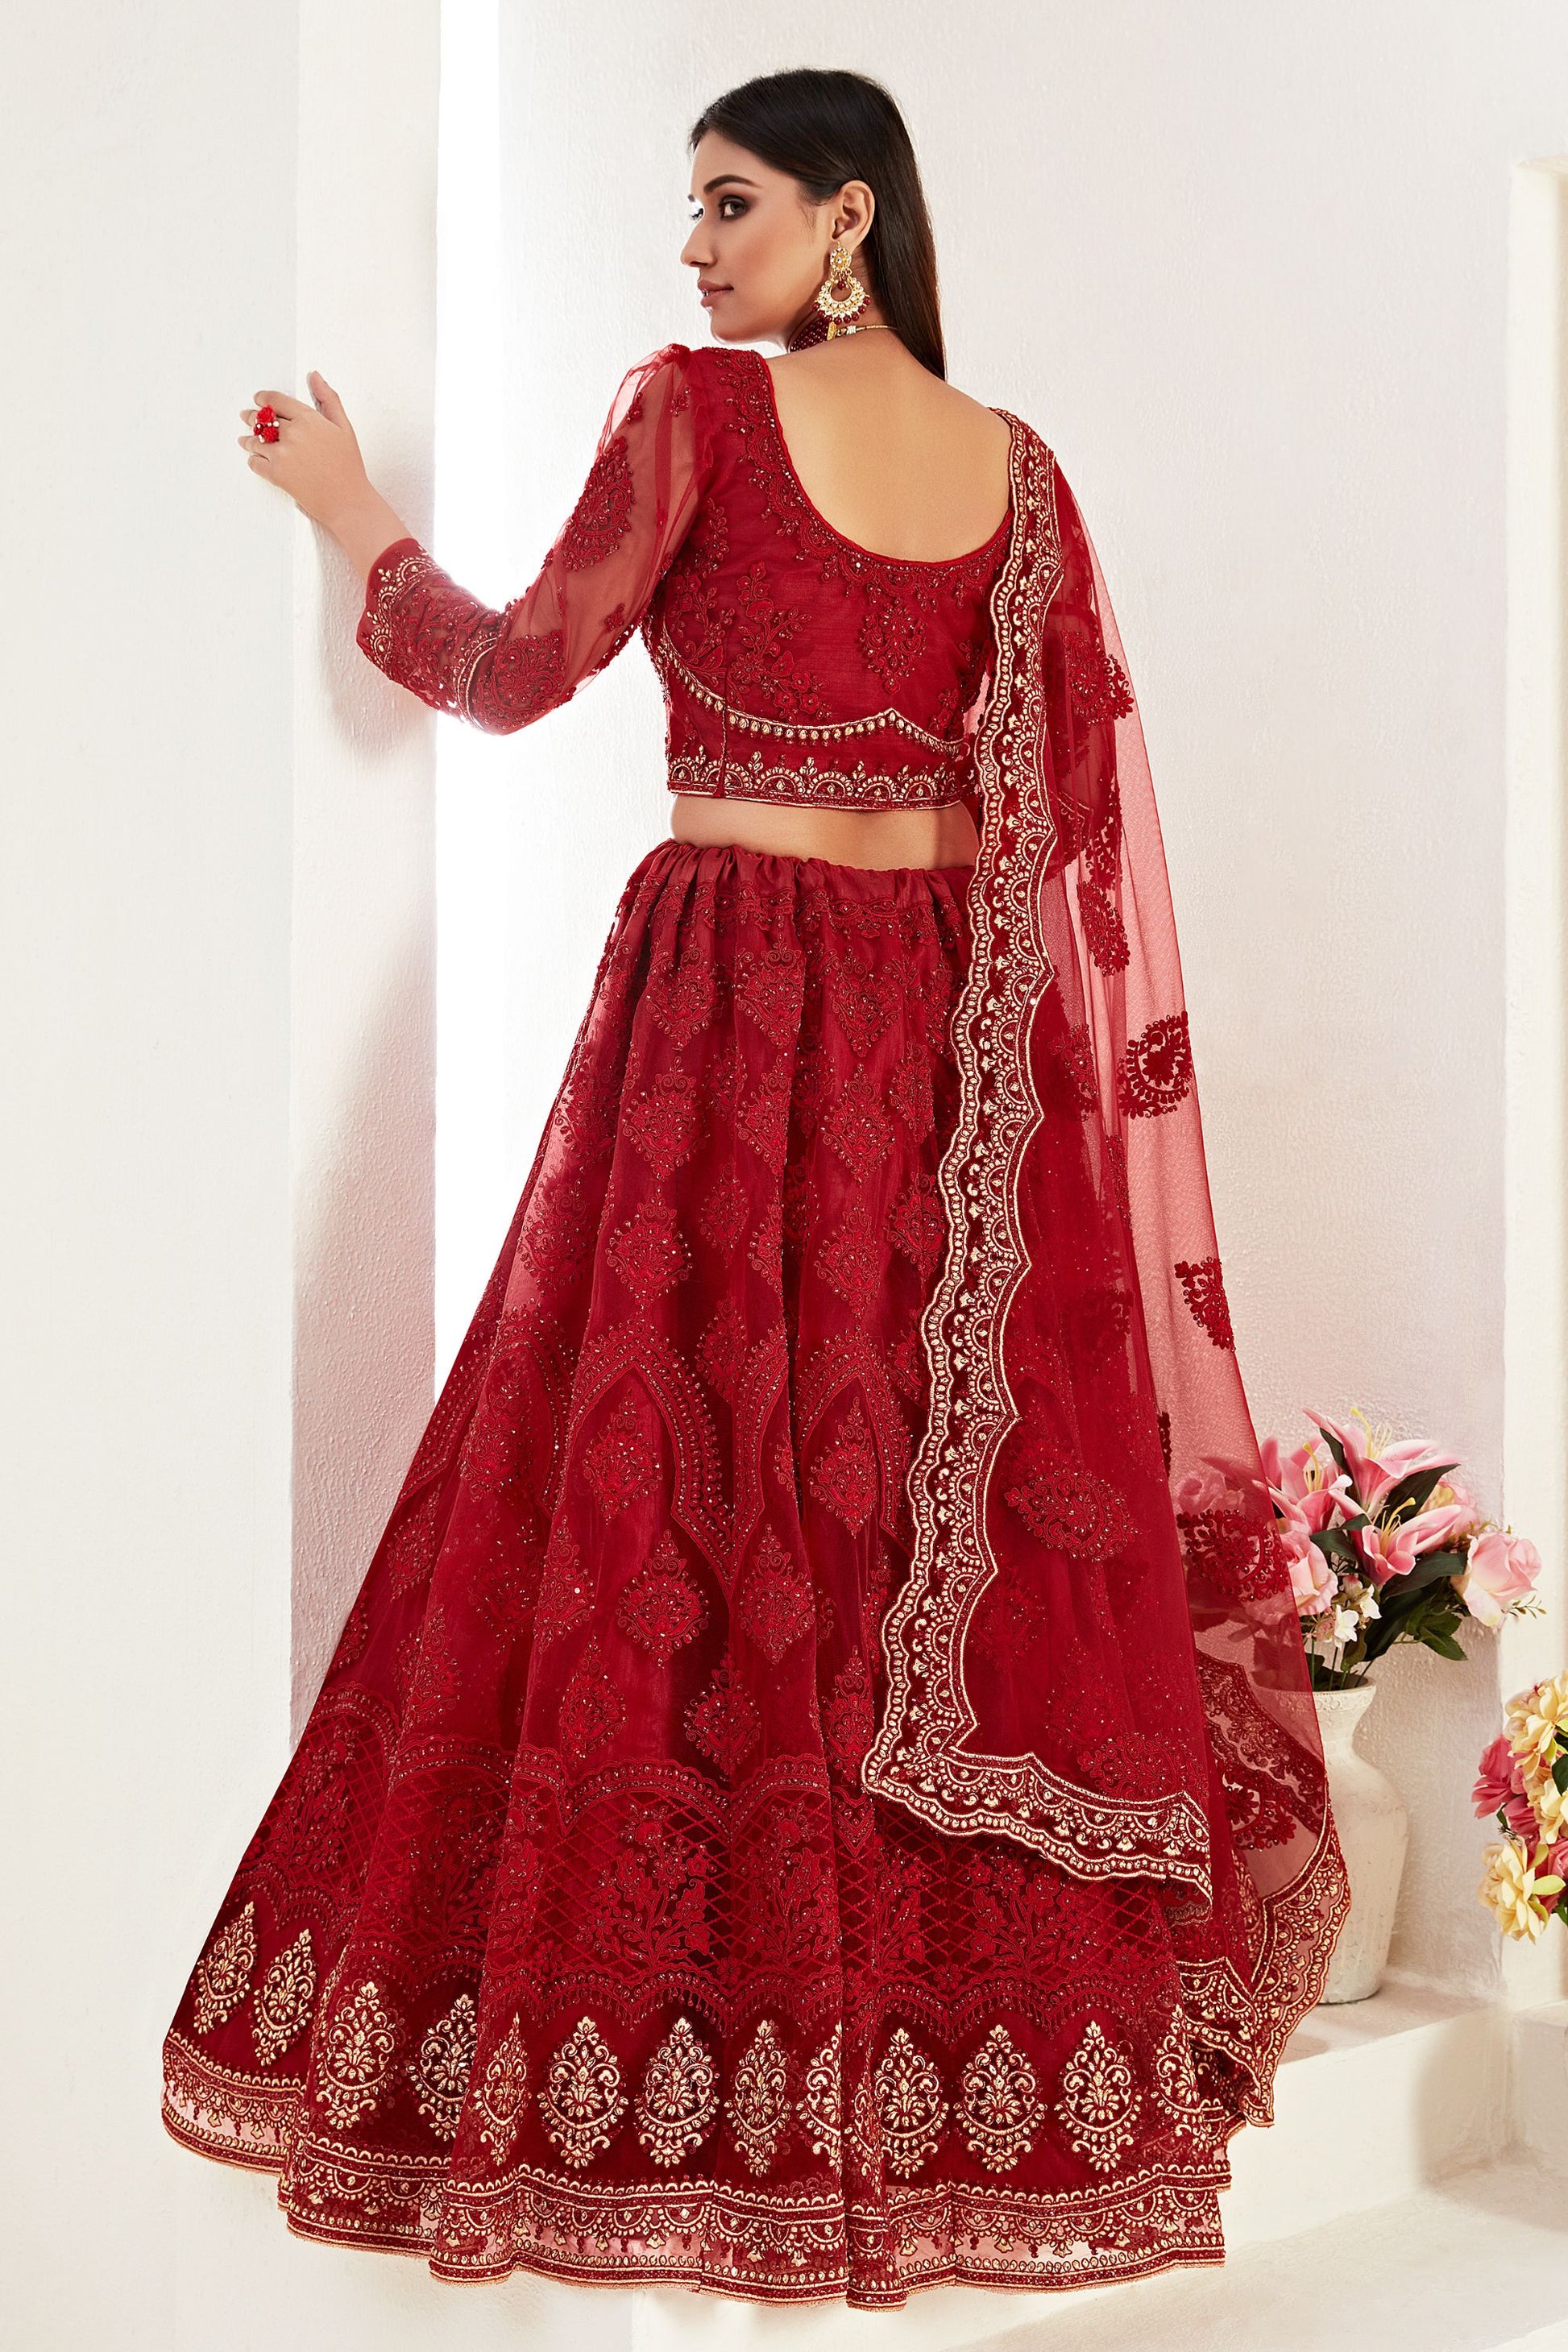 Red Net Lehenga Choli For Indian Festivals & Weddings - Thread Embroidery Work, Codding Embroidery Work, Stone Work